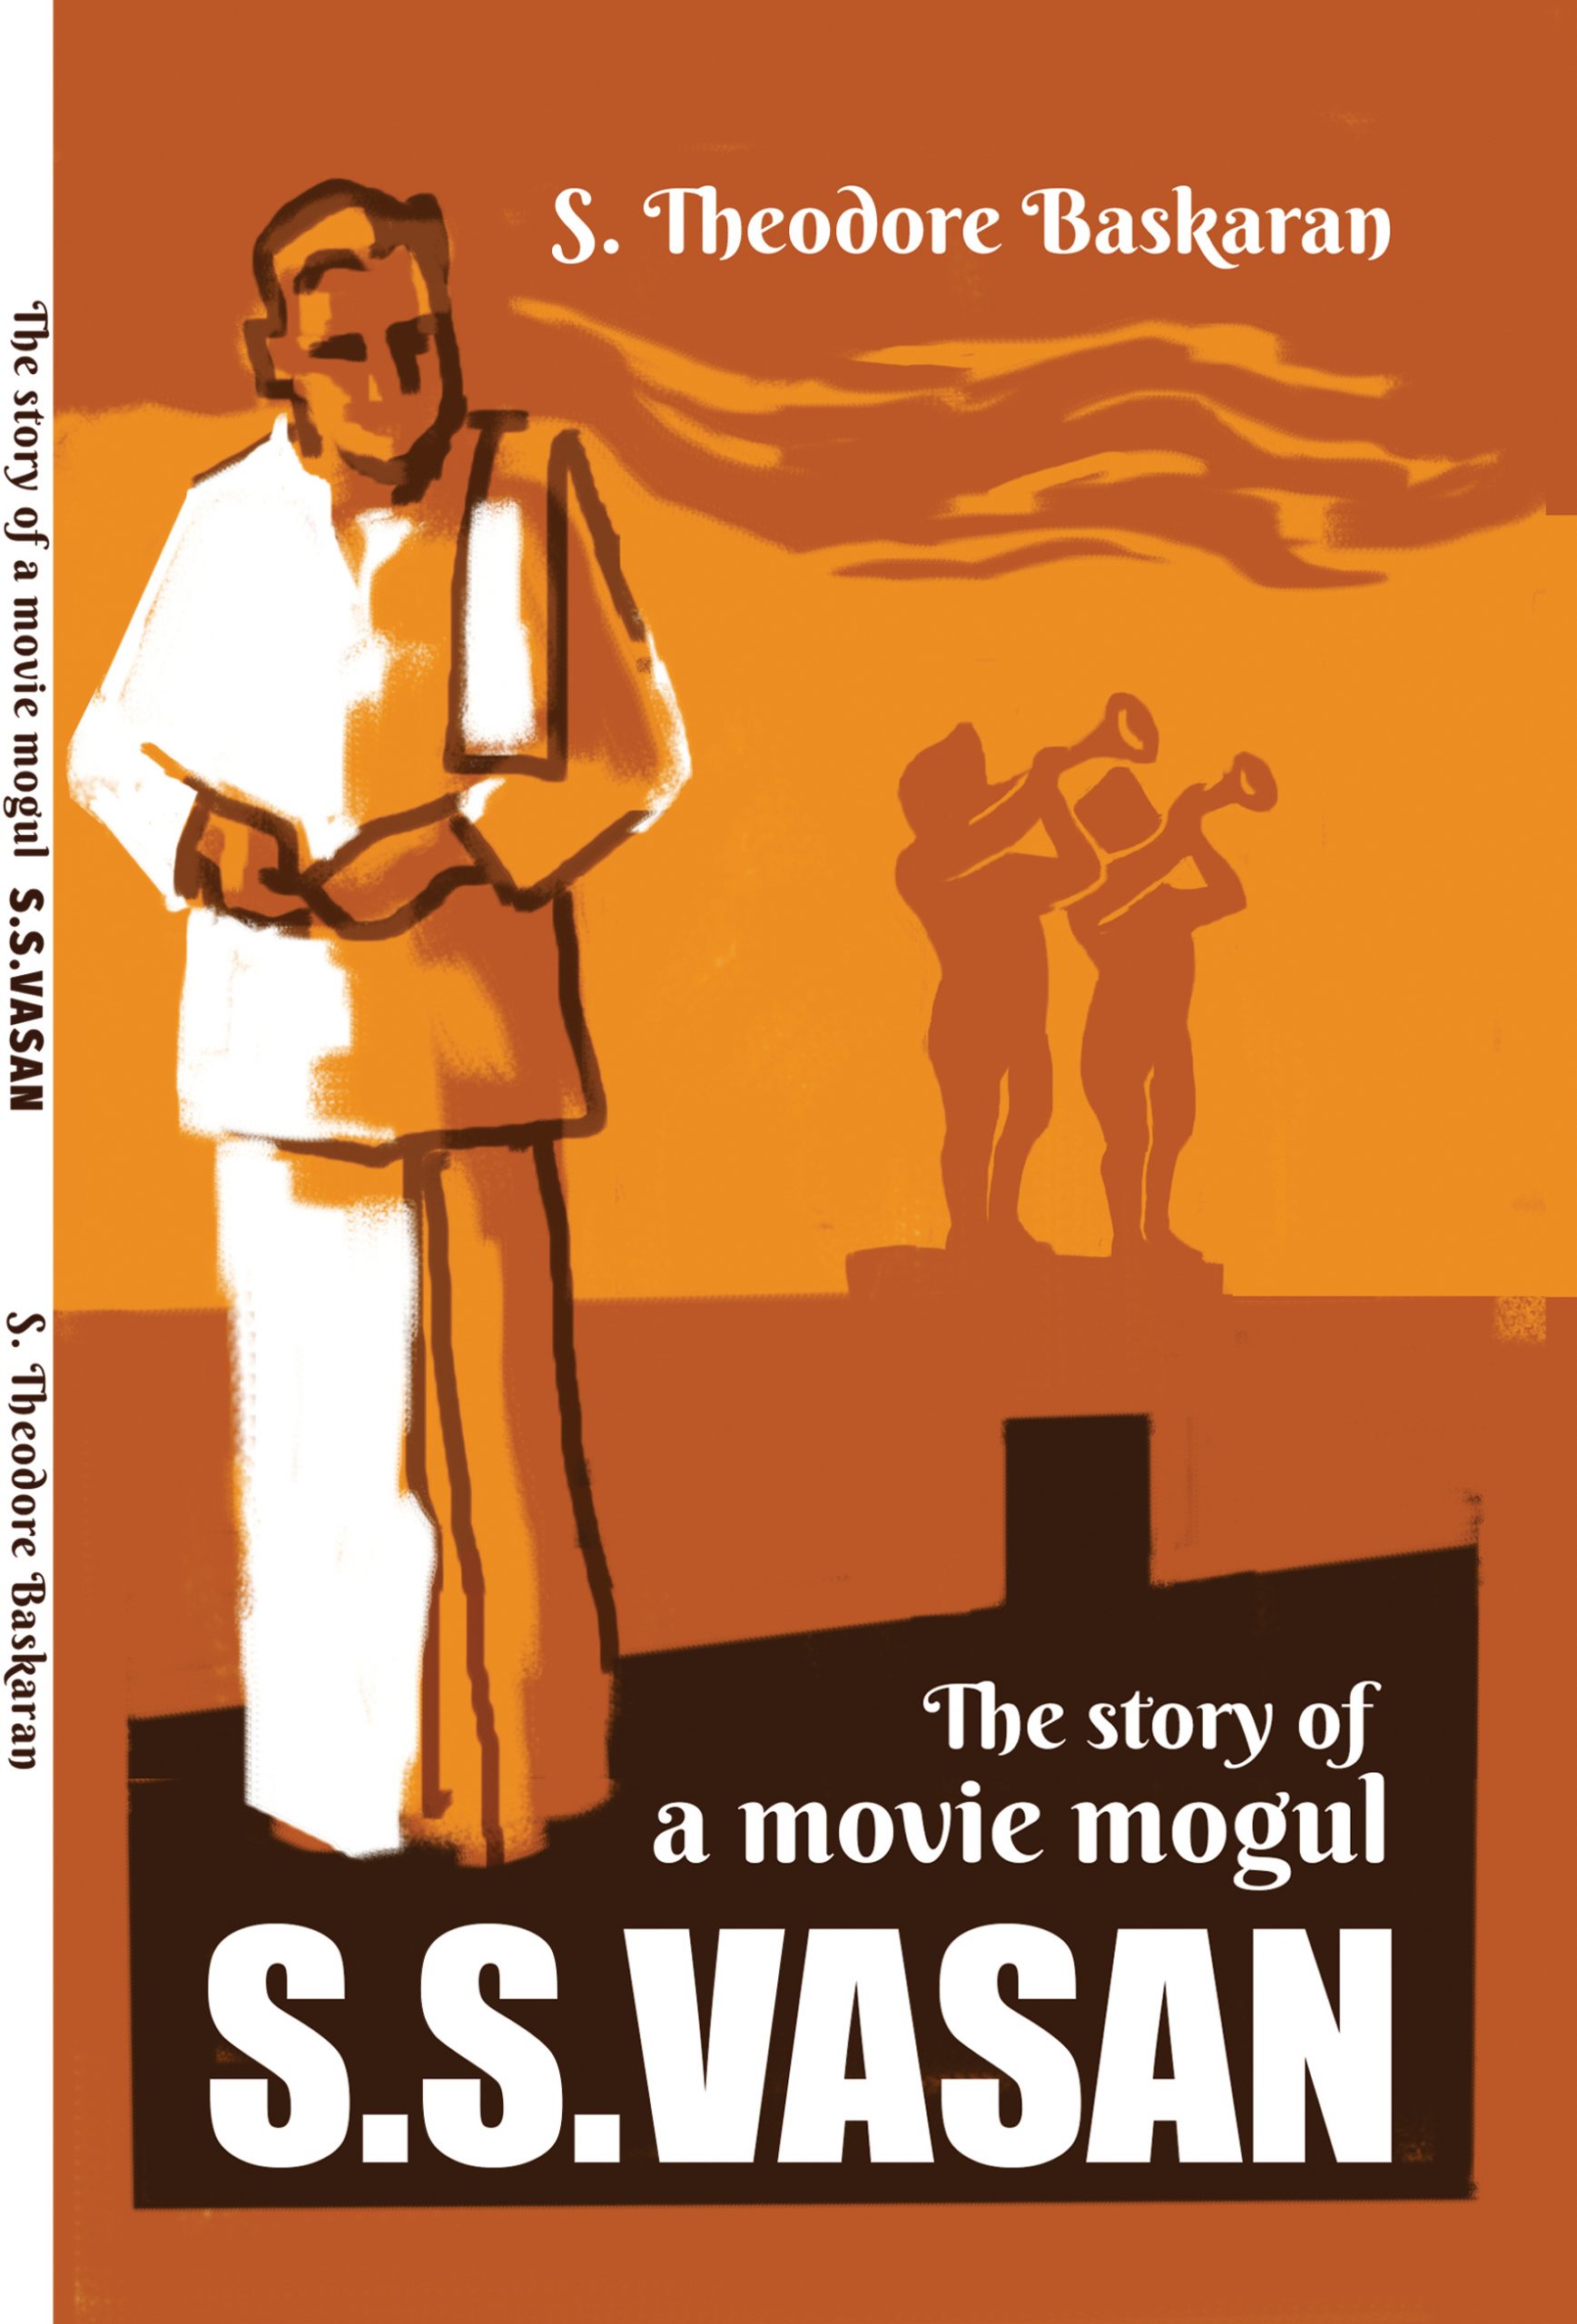 The story of a movie mogul S. S. Vasan